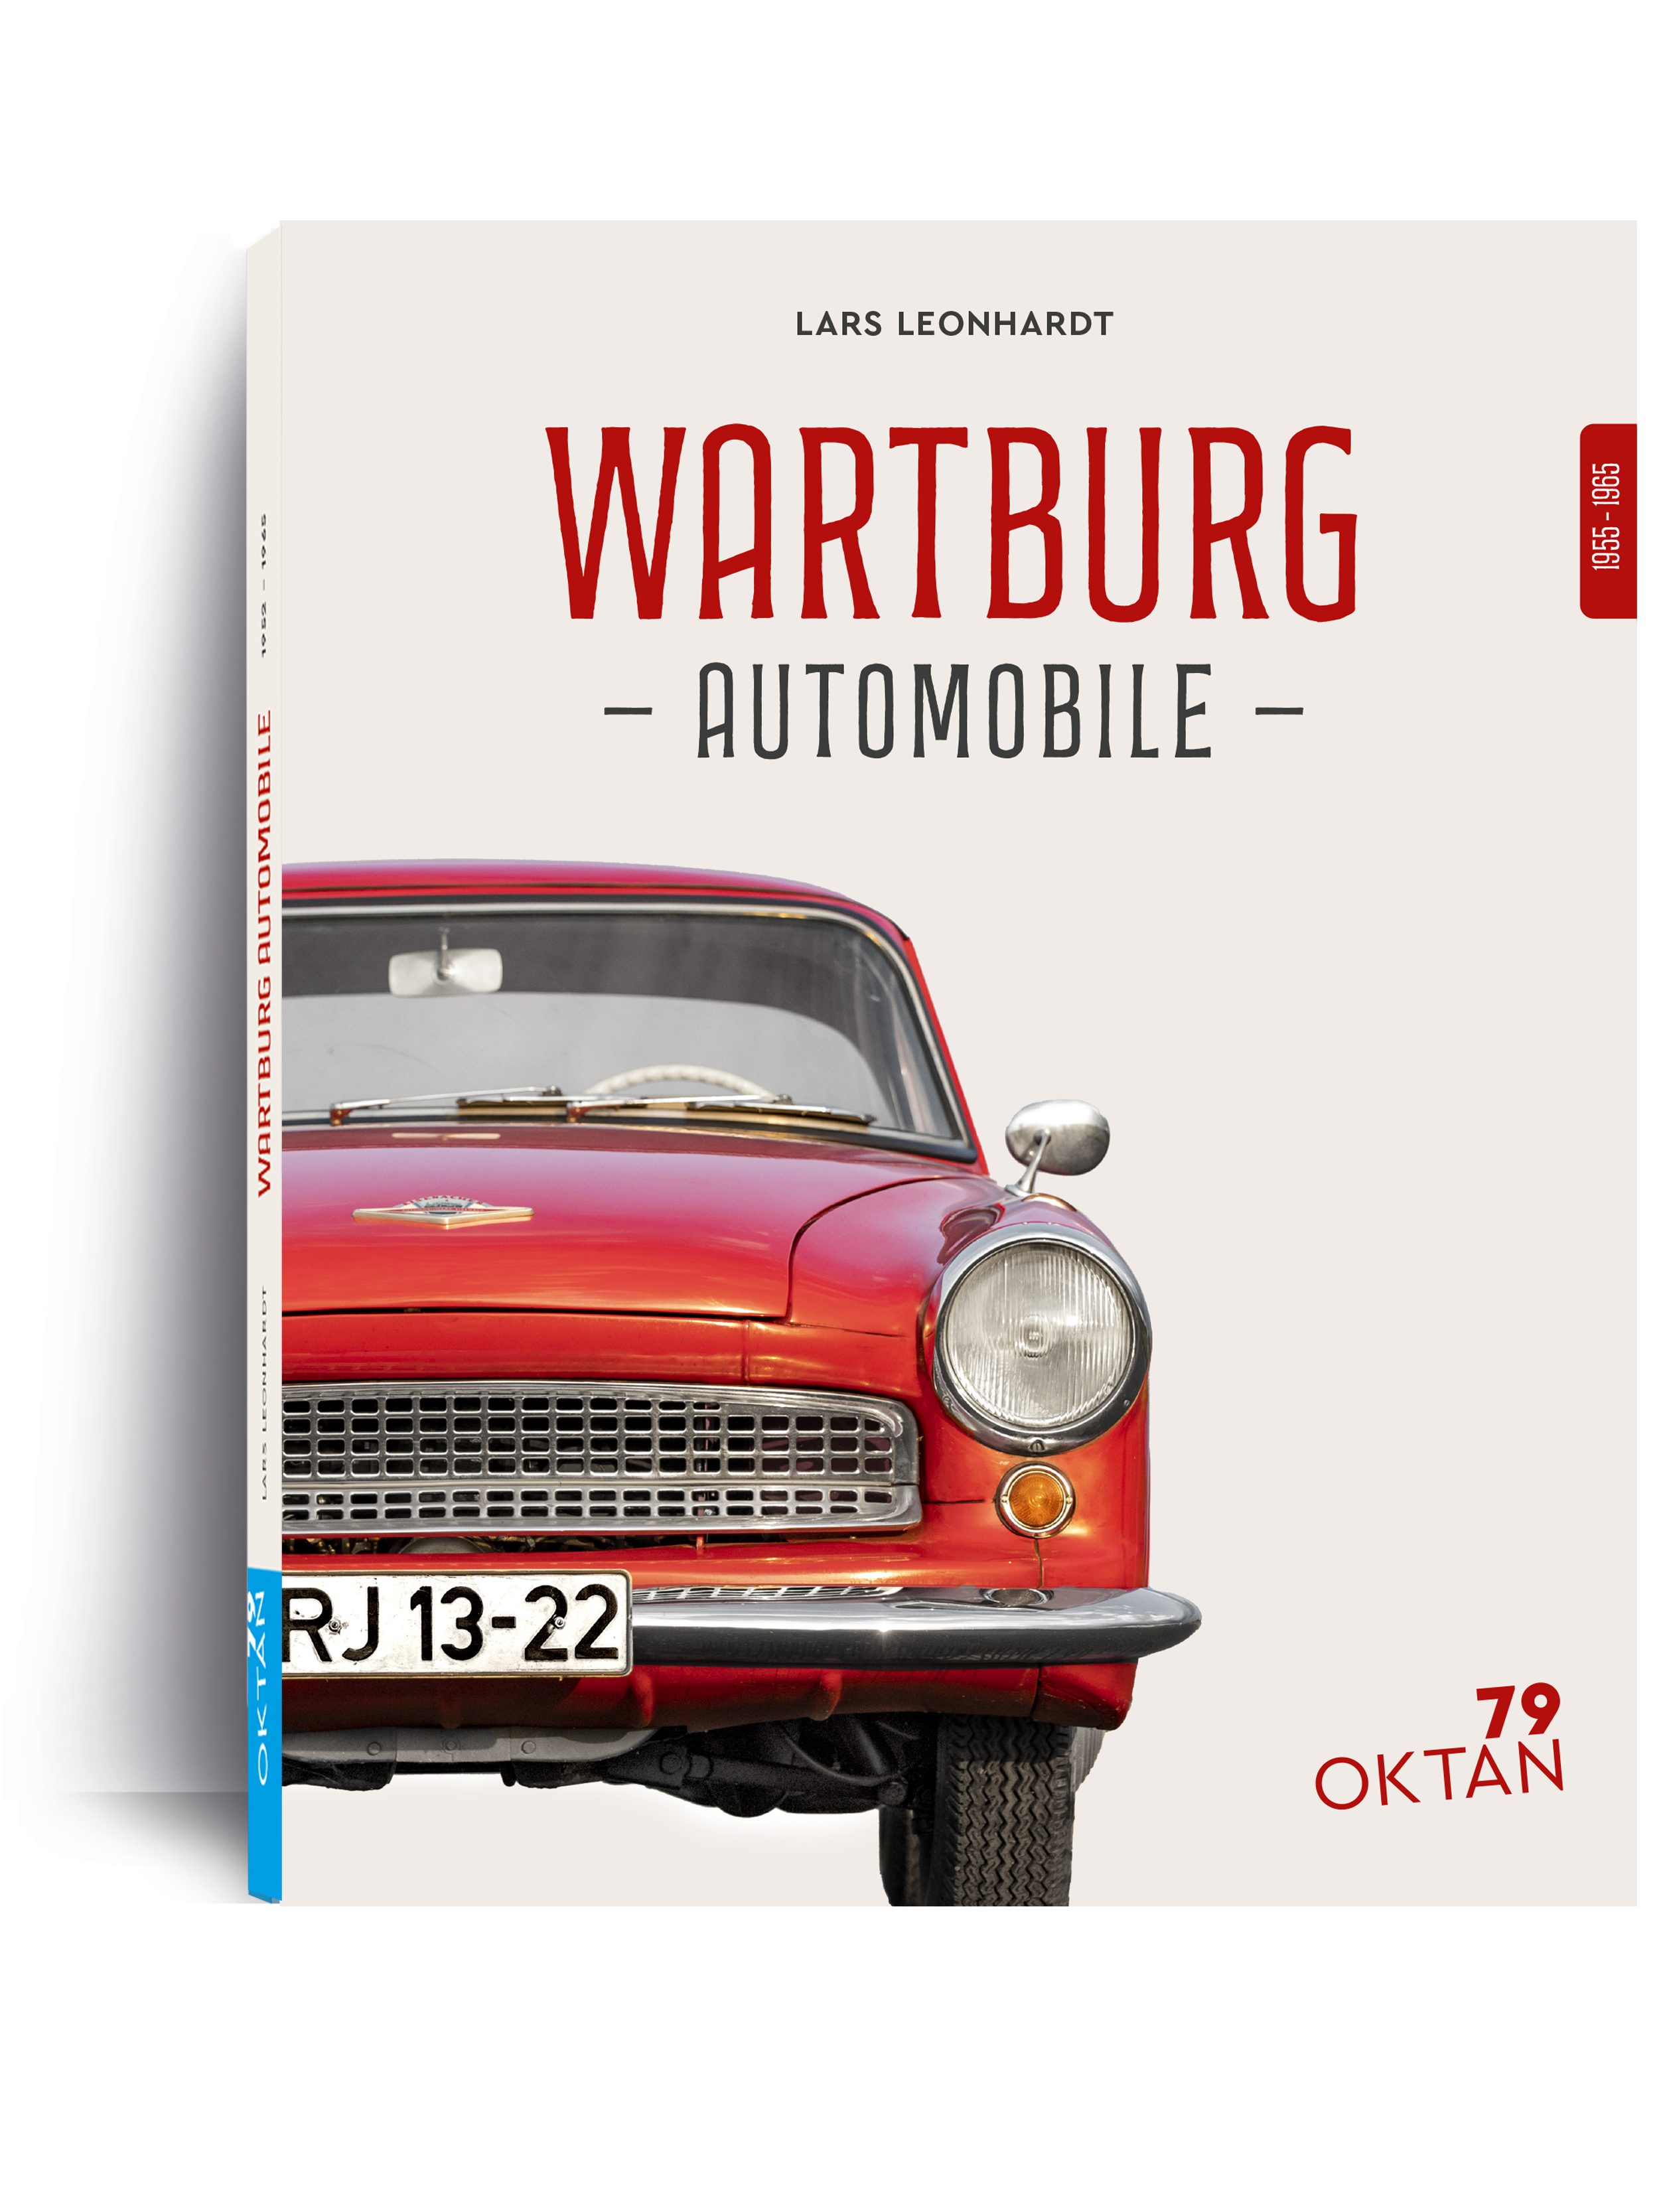 Wartburg Automobile